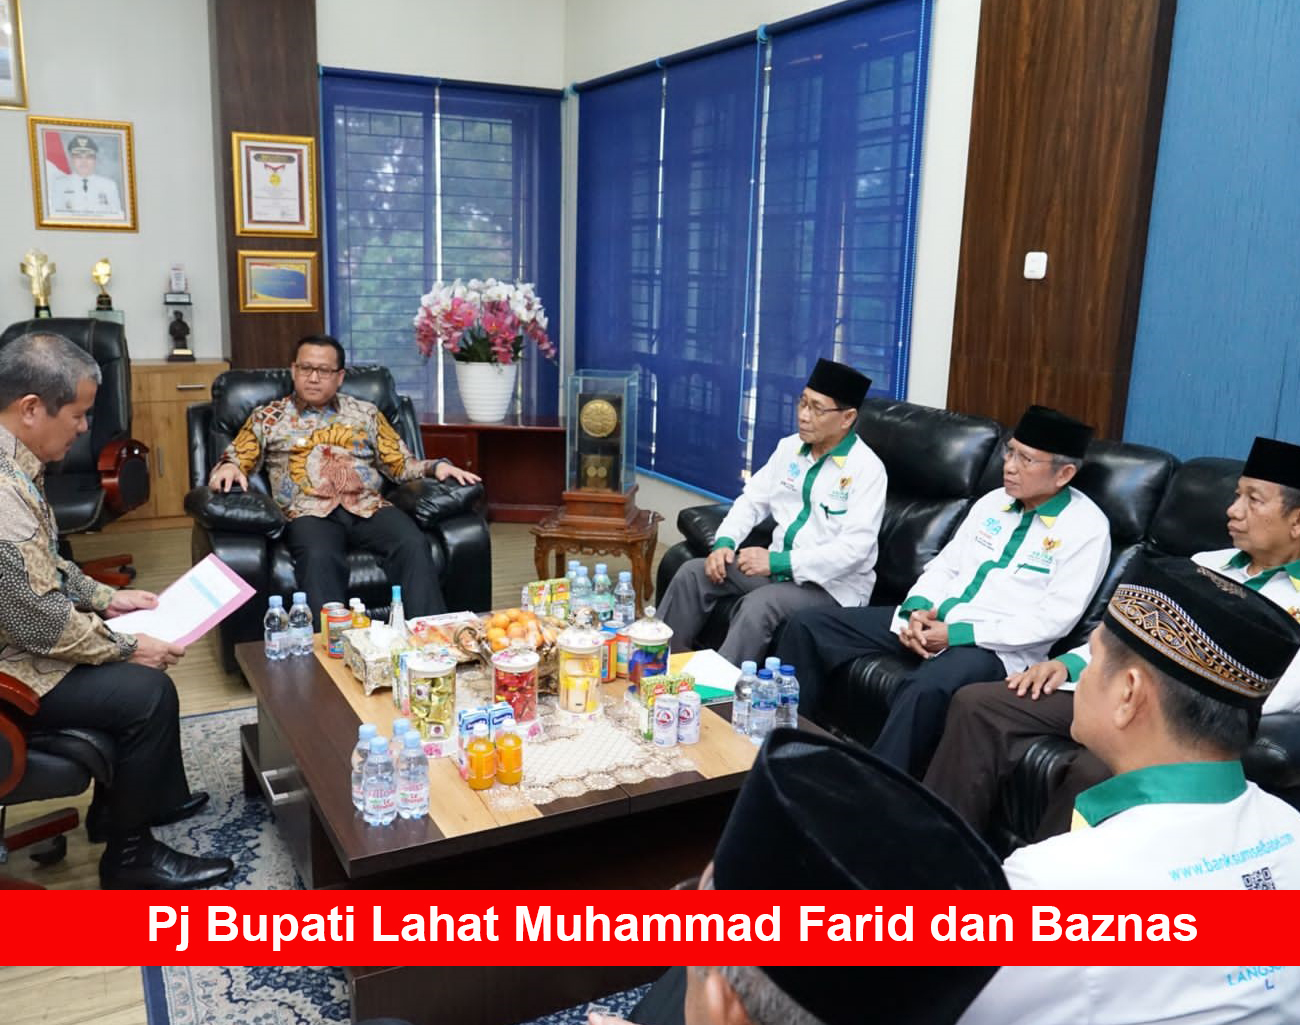 Pj Bupati Lahat Muhammad Farid Terima Audiensi Pimpinan Baznas, Bahas ini